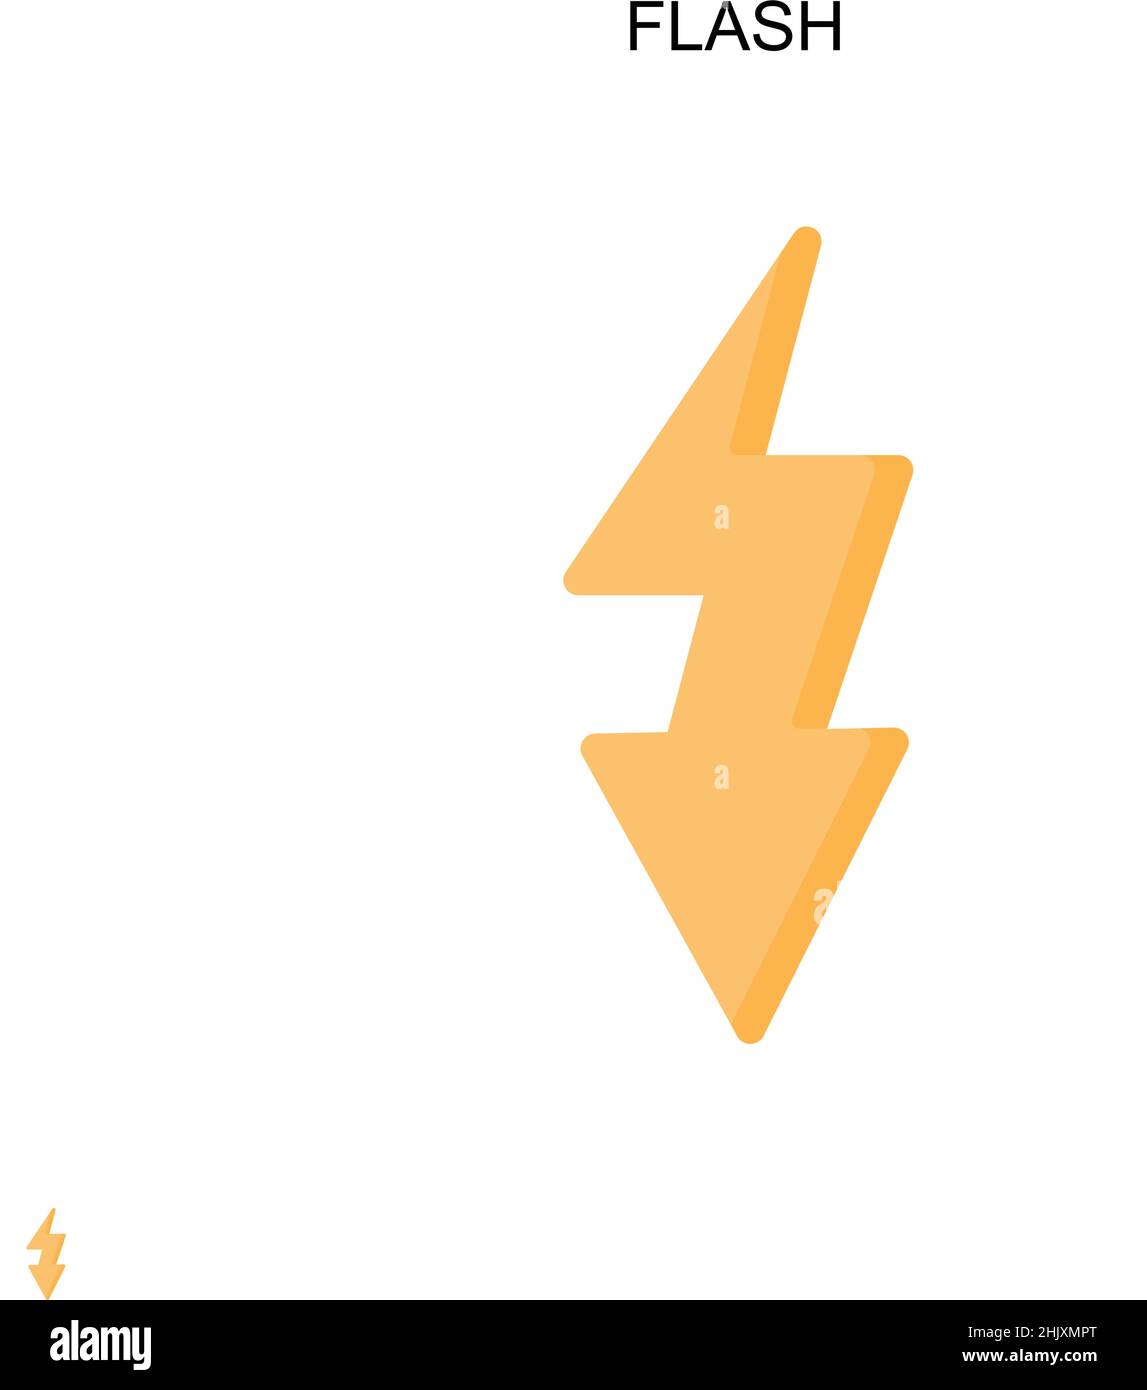 Flash Simple vector icon. Illustration symbol design template for web mobile UI element. Stock Vector